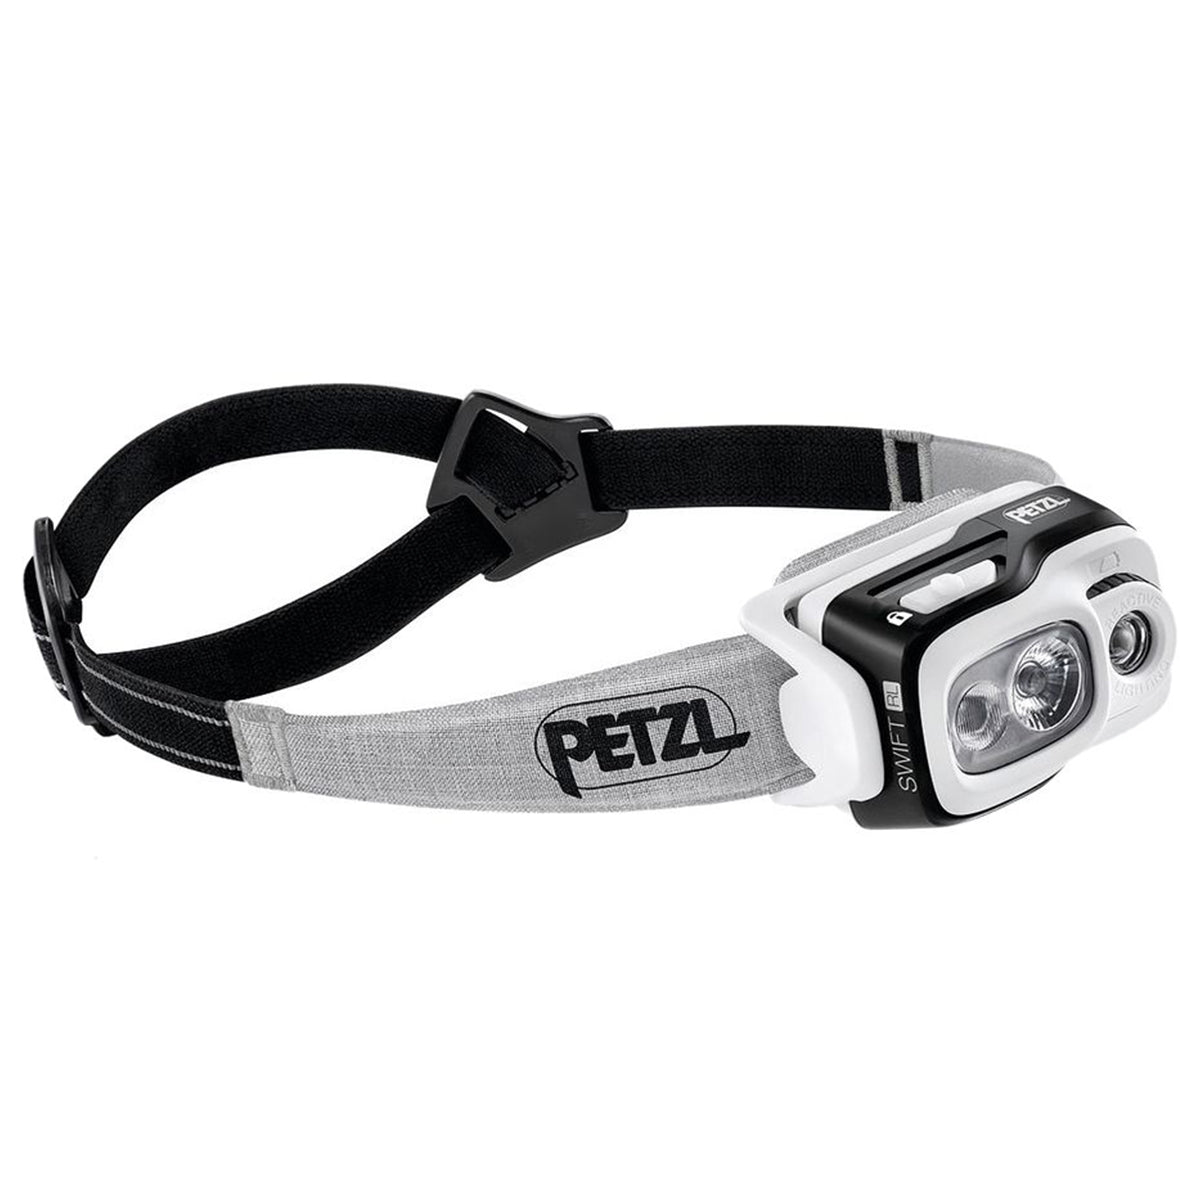 Petzl Swift RL by Petzl America | Gear - goHUNT Shop